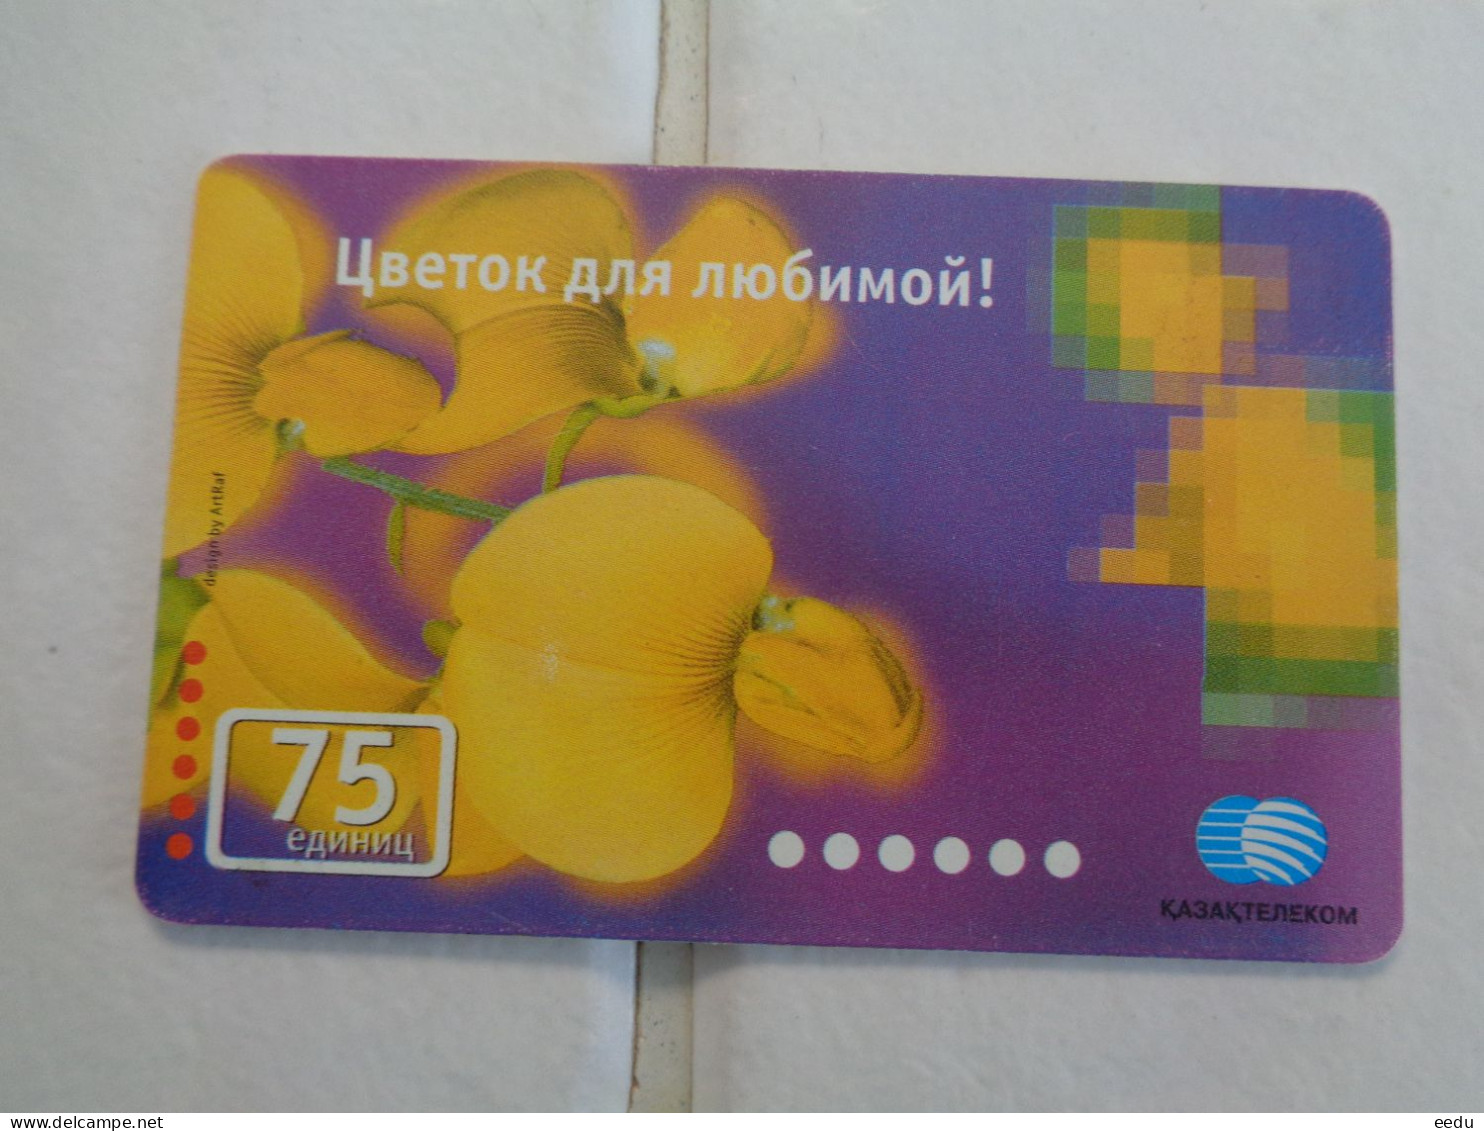 Kazakhstan Phonecard - Kazakhstan